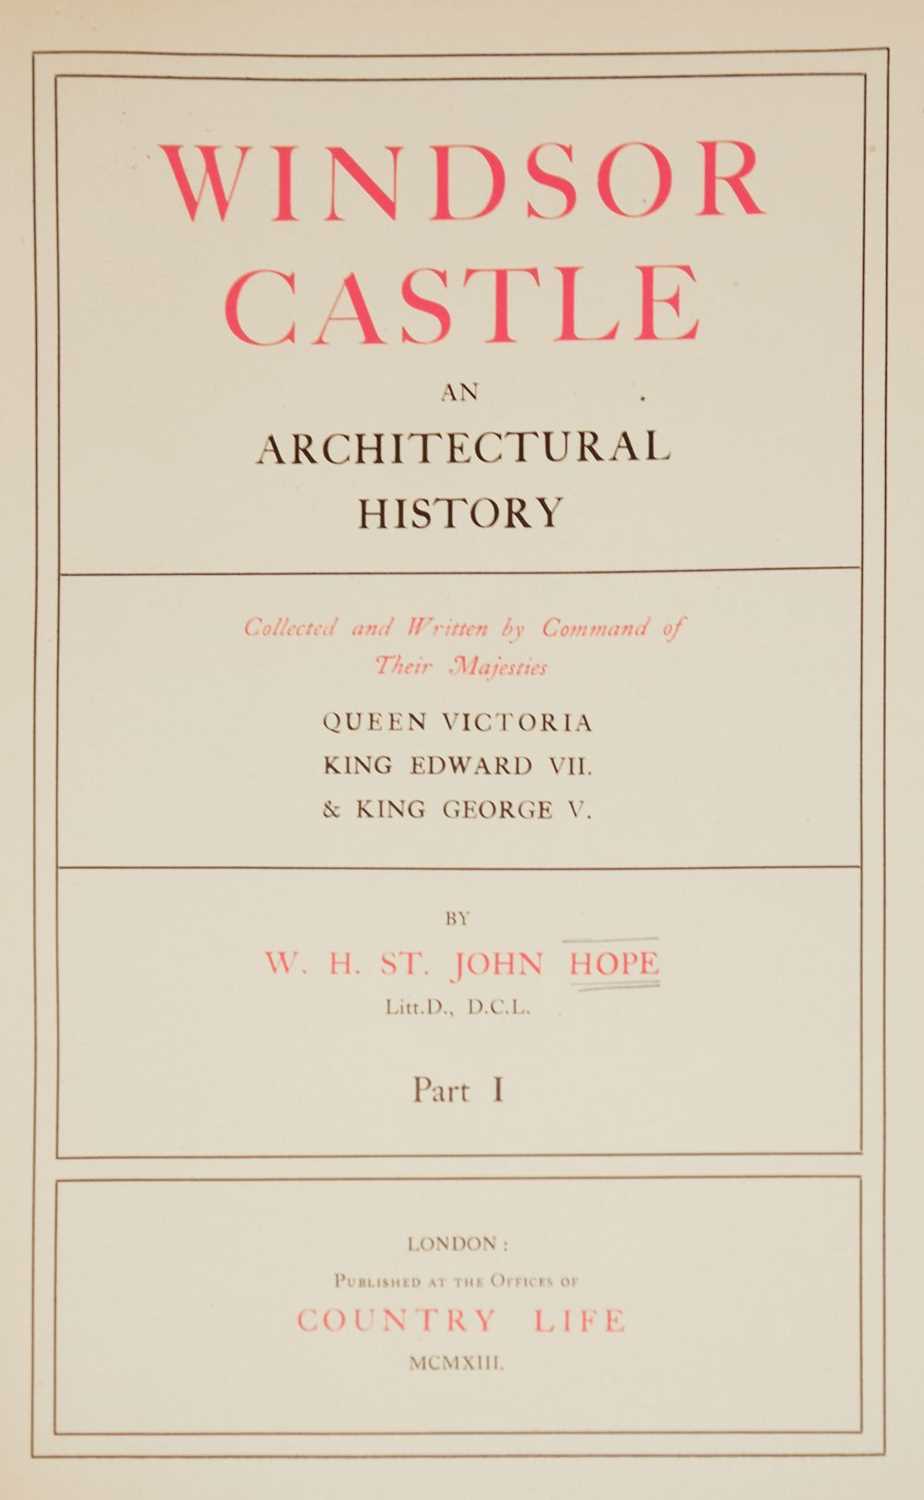 Lot 96 - Hope (W.H. St. John). Windsor Castle an Architectural History, 2 vols. & plans, 1913